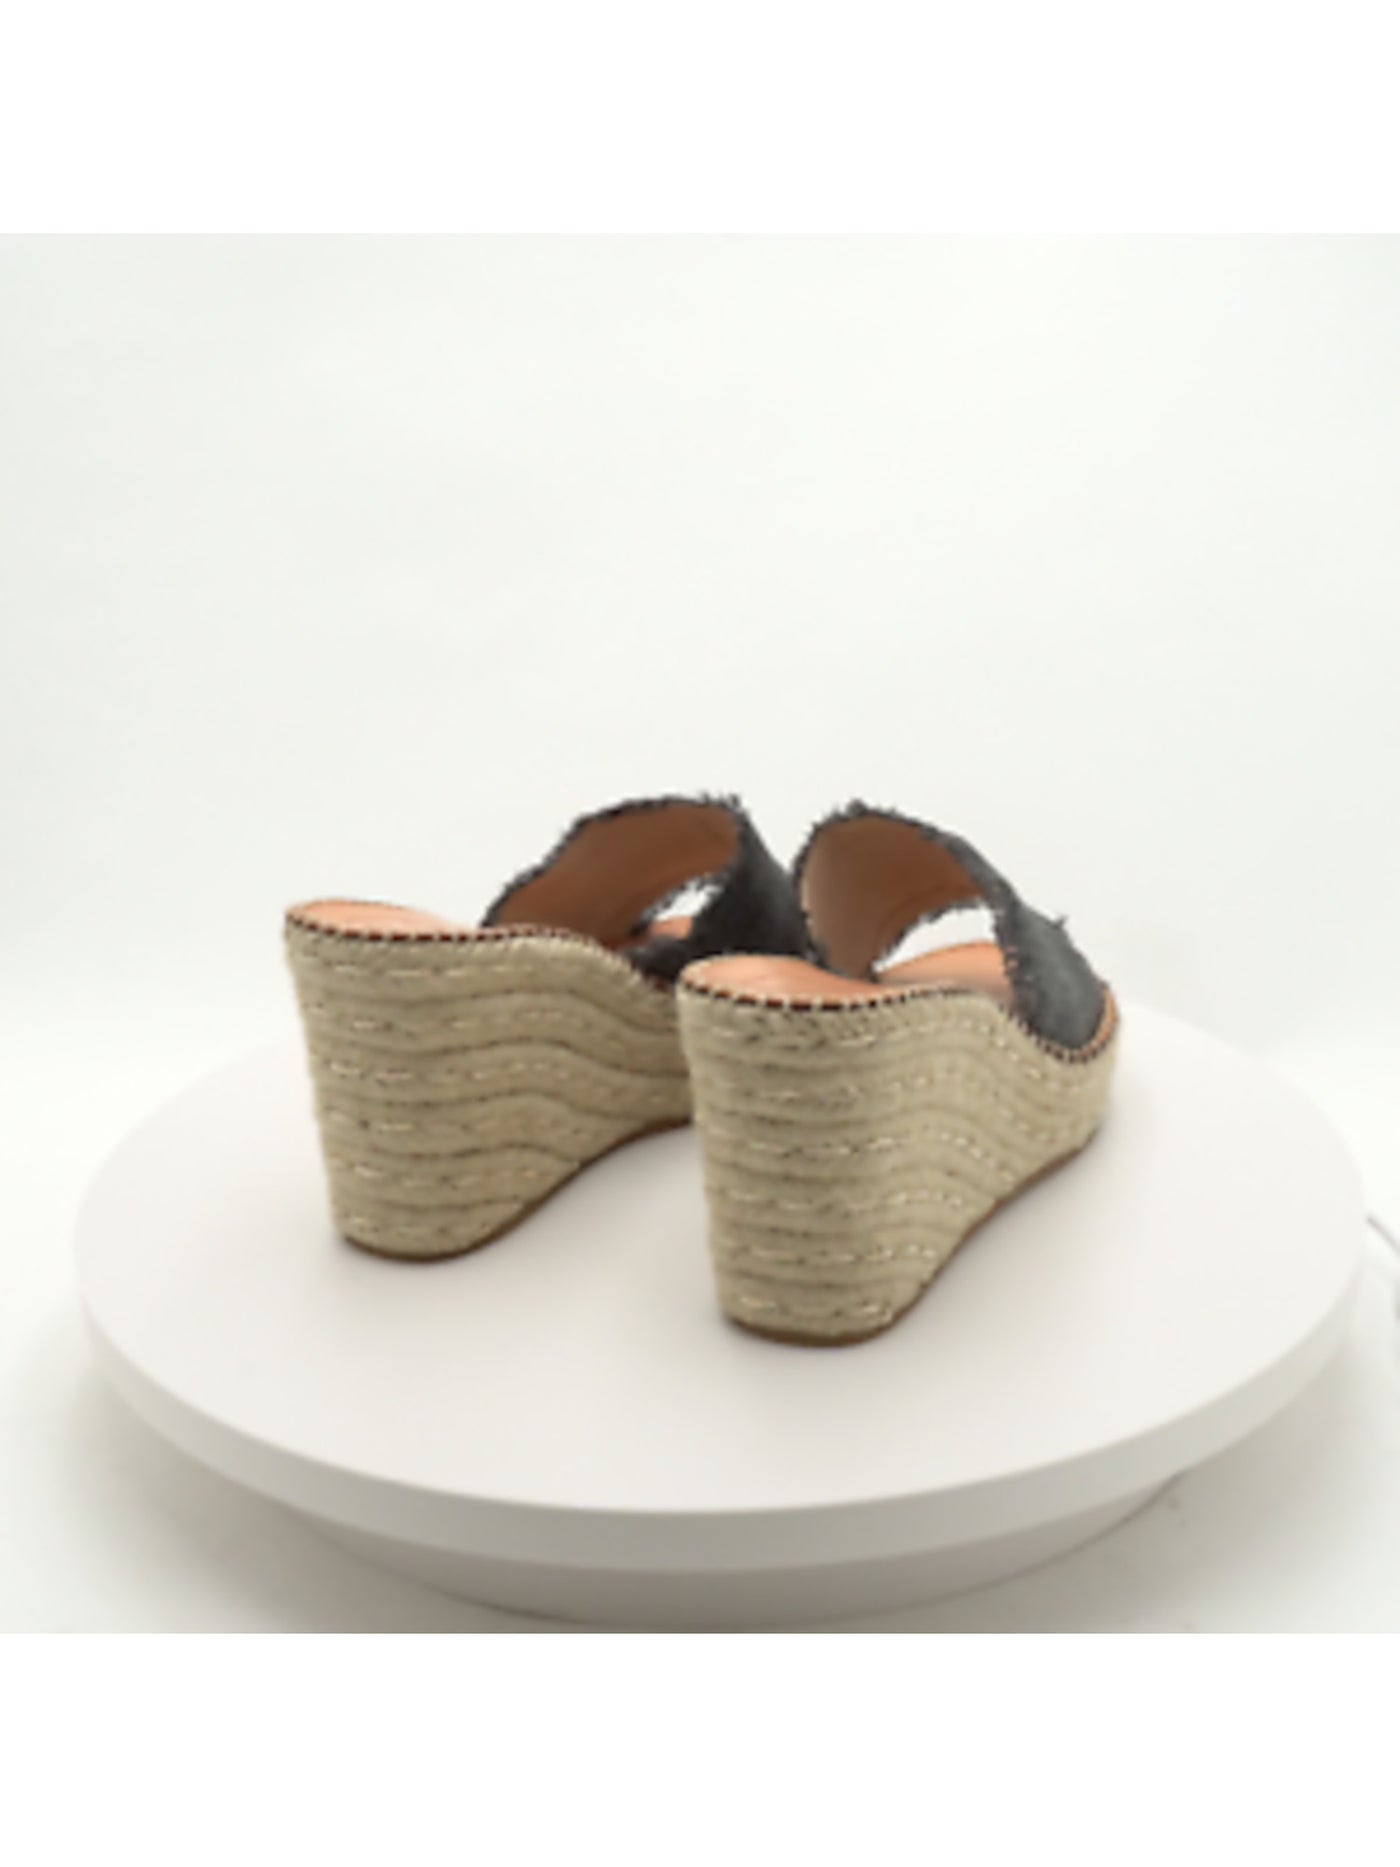 DOLCE VITA Womens Beige 1-1/2" Platform Frayed Pim Round Toe Wedge Slip On Espadrille Shoes 9.5 M